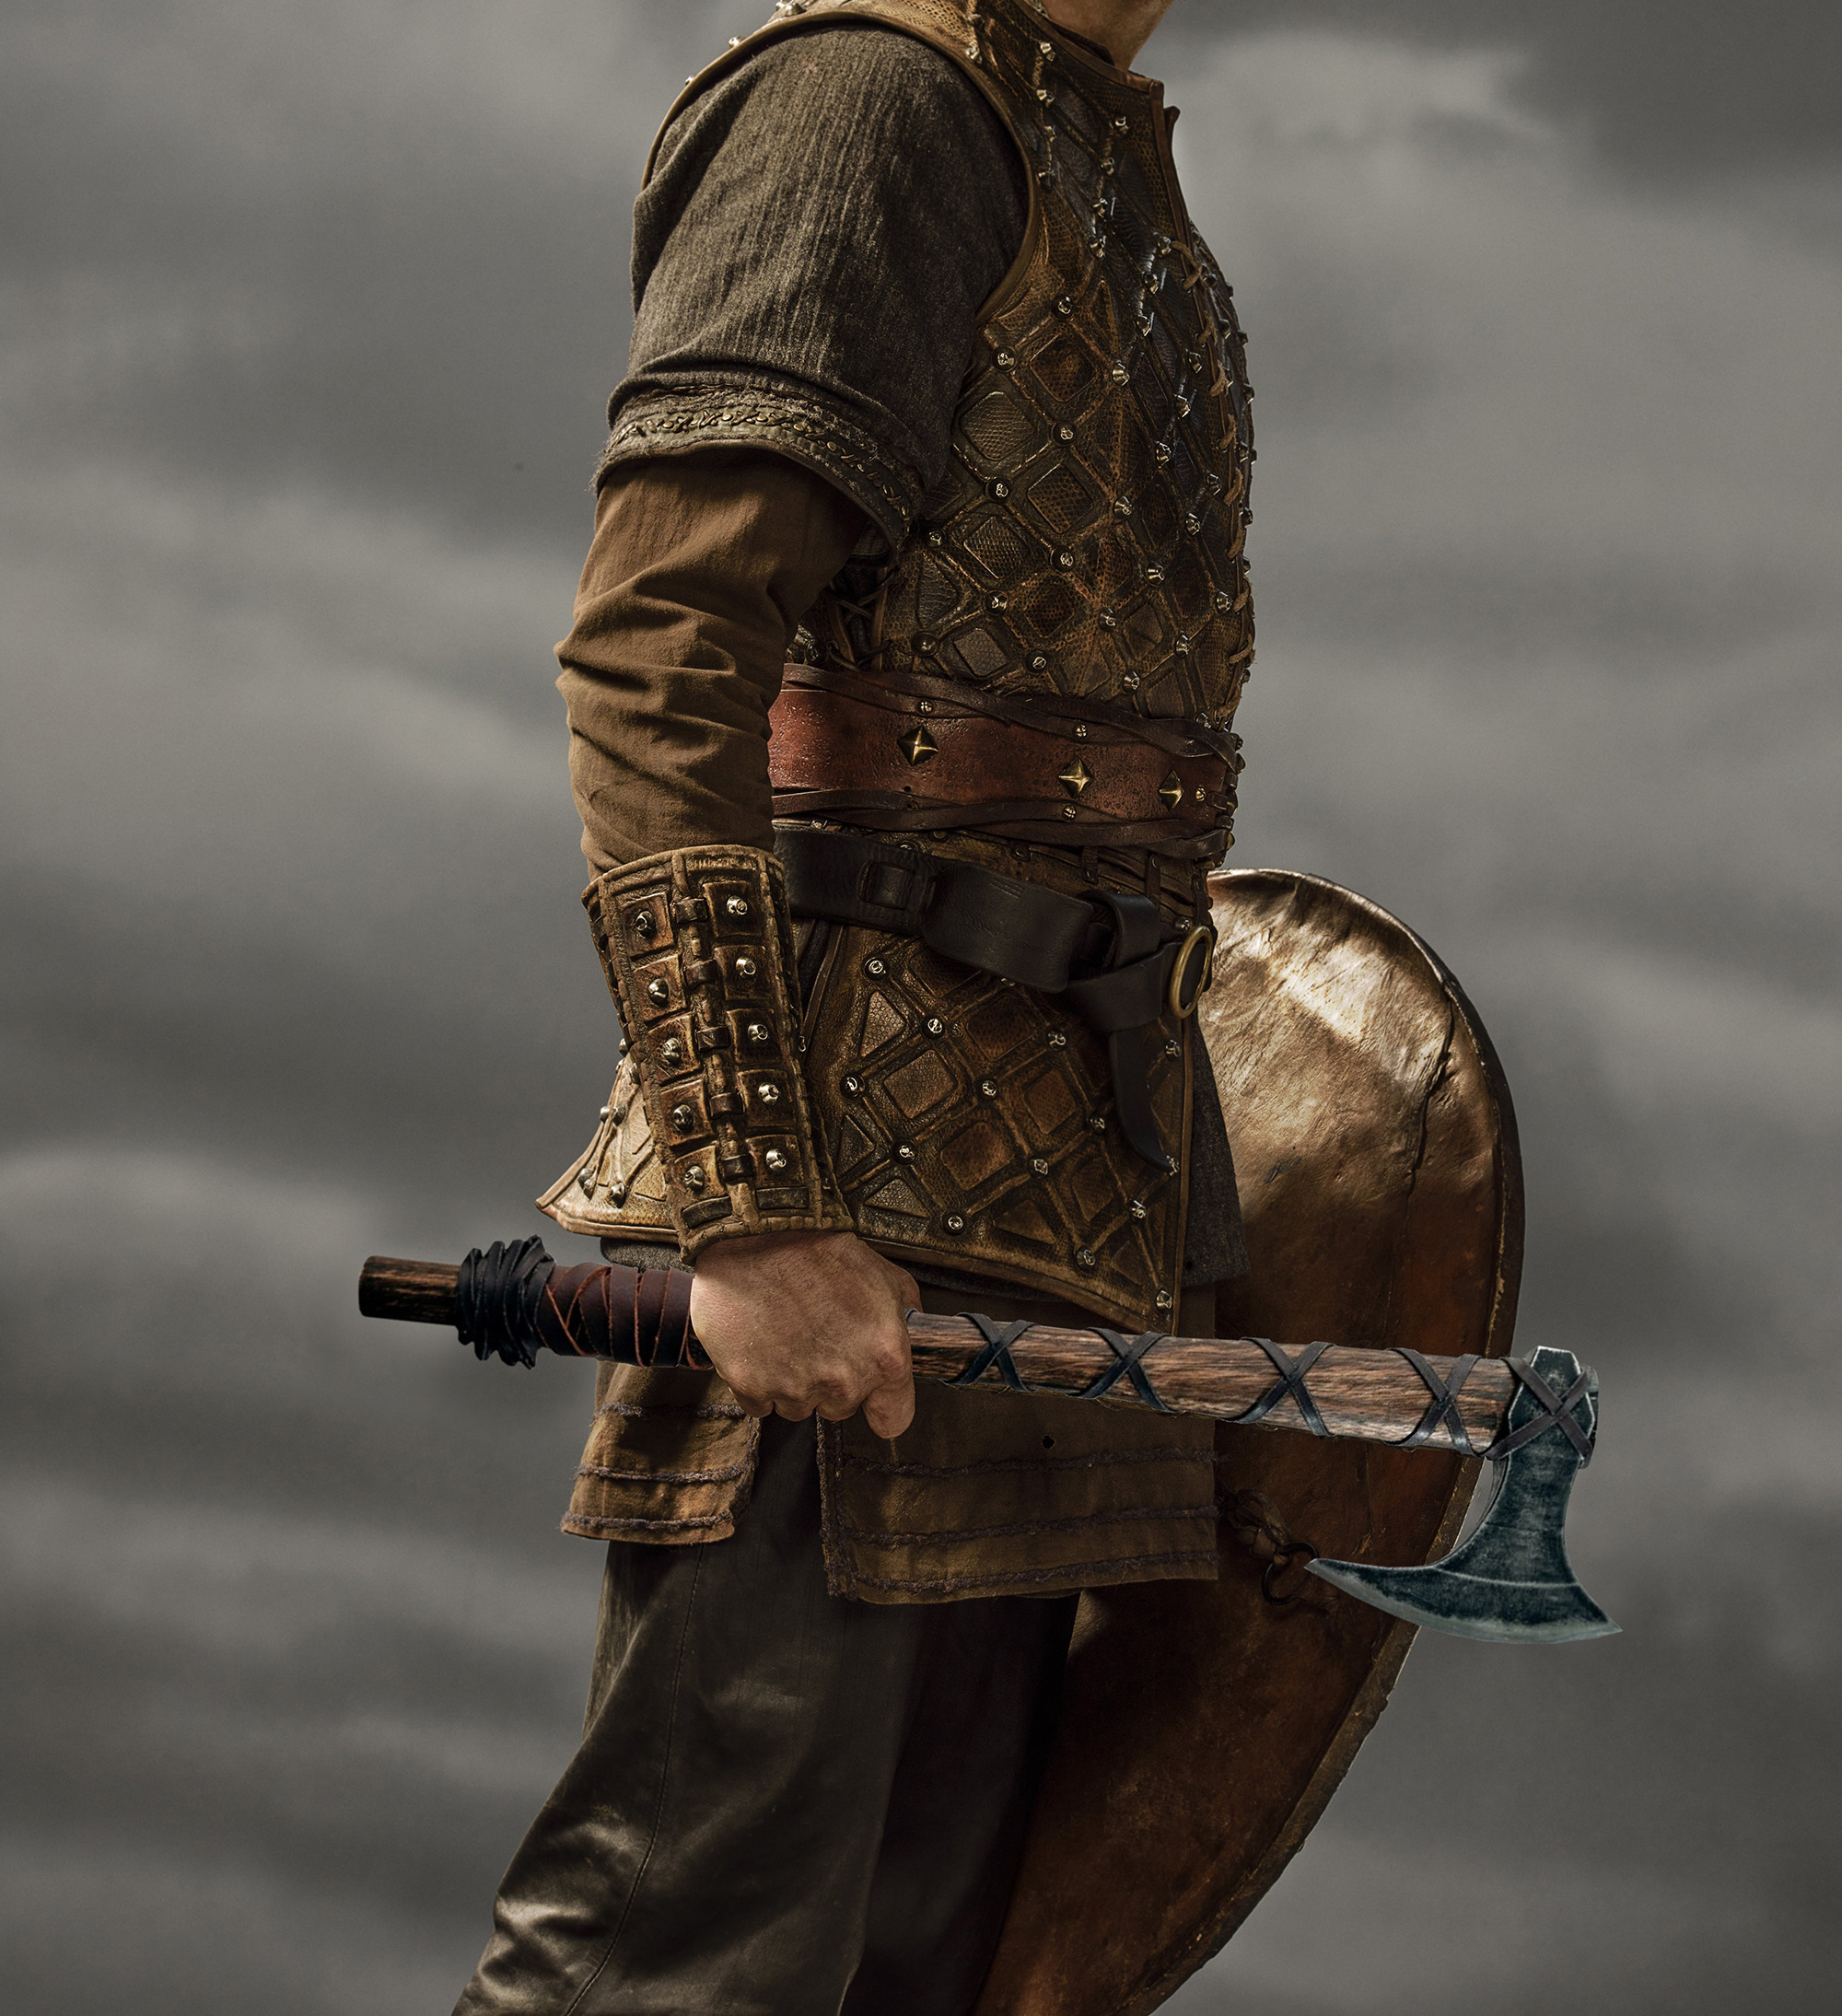 Vikings - Axe of Ragnar Lothbrok - Handforged